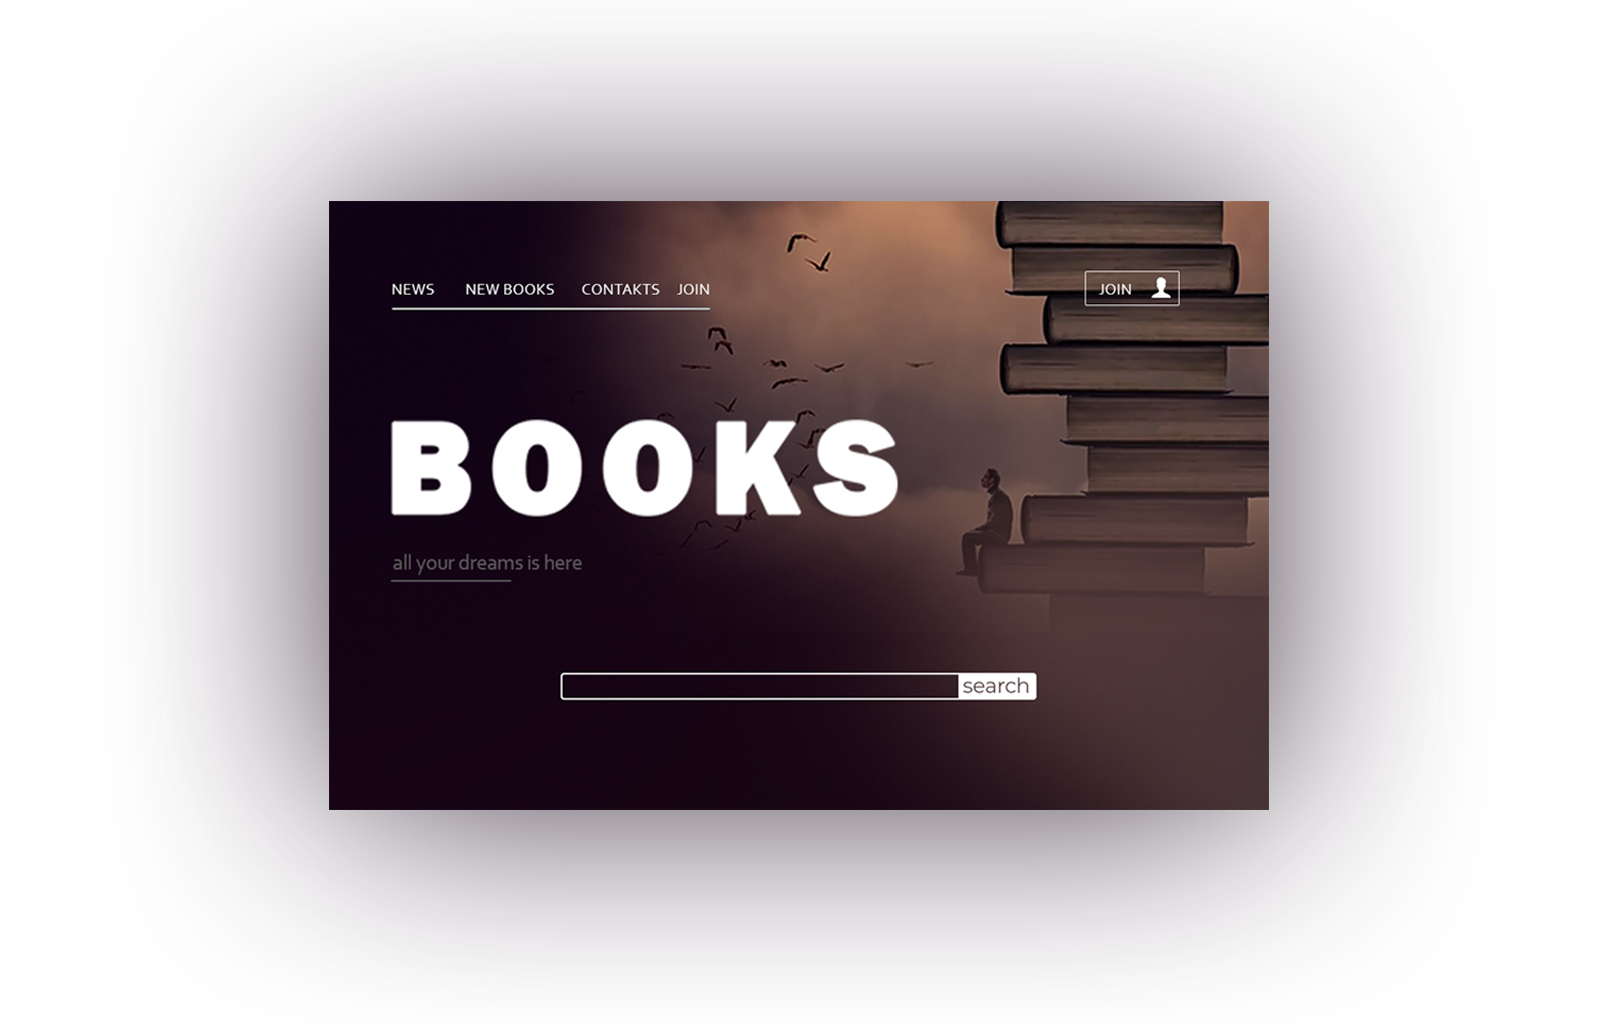 Like shop book. Лендинг книжного магазина. Дизайн сайта книжного магазина. Книжный магазин оформление сайта. Дизайн сайта книги.